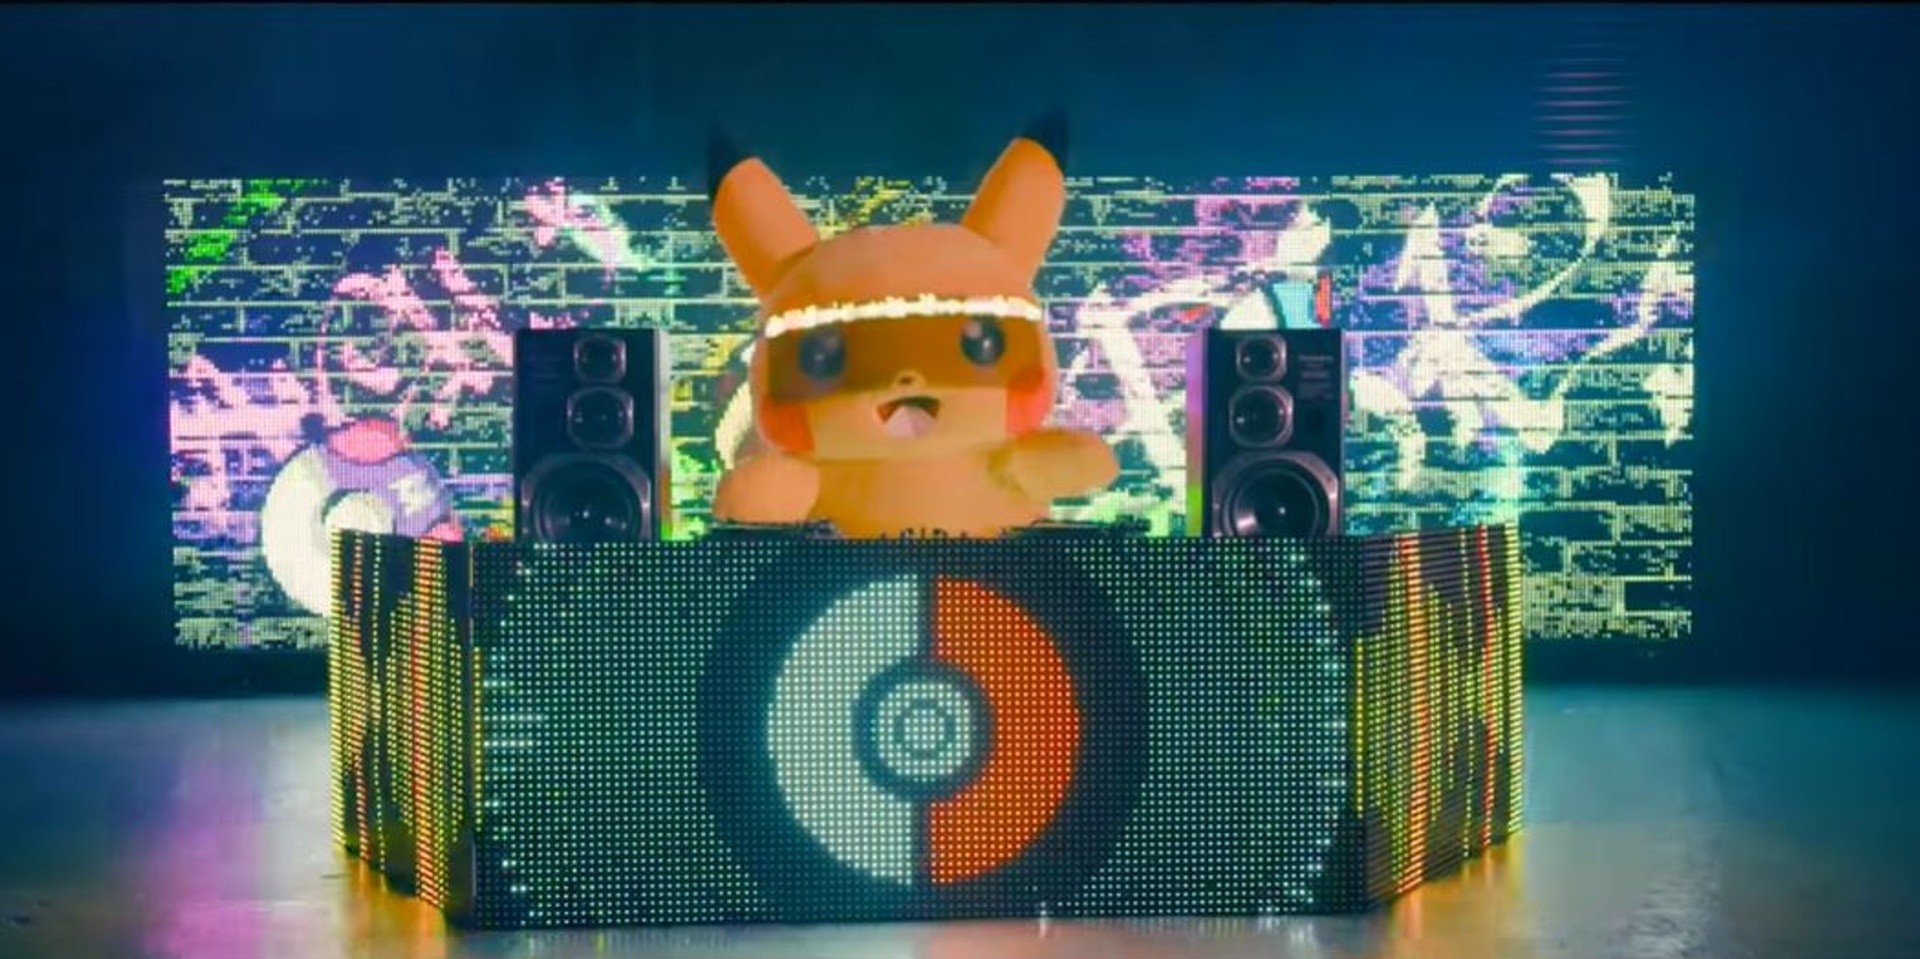 DJ Pikachu electrifies with 'Lightning Remix' and stunning light show – watch